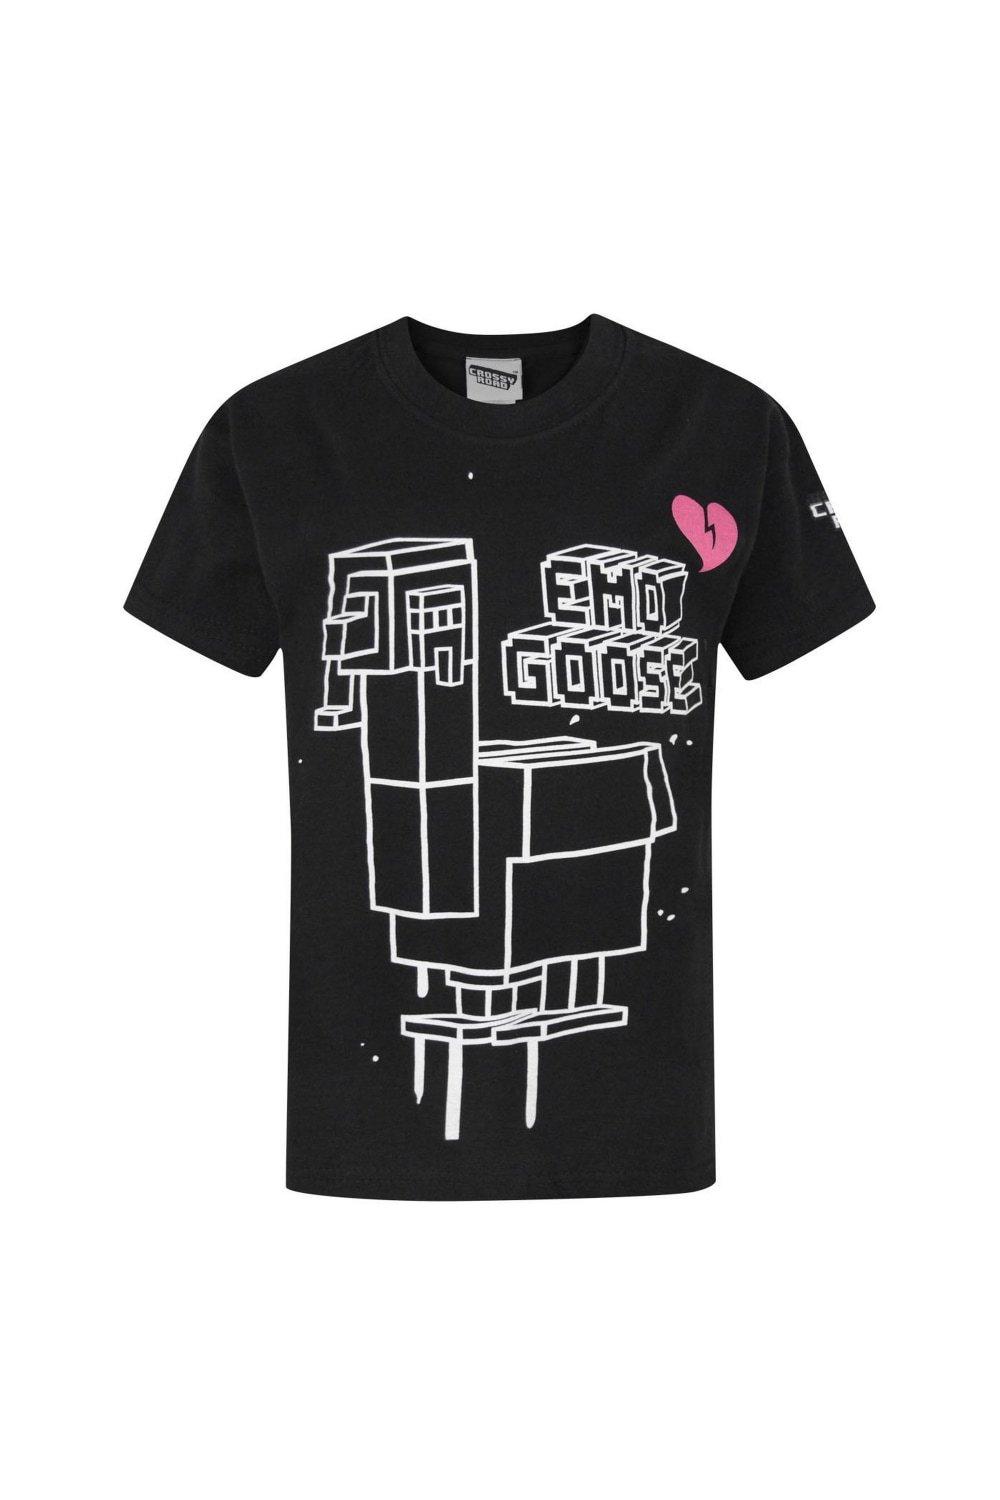 Crossy Road Official Emo Goose Short Sleeved T-Shirt